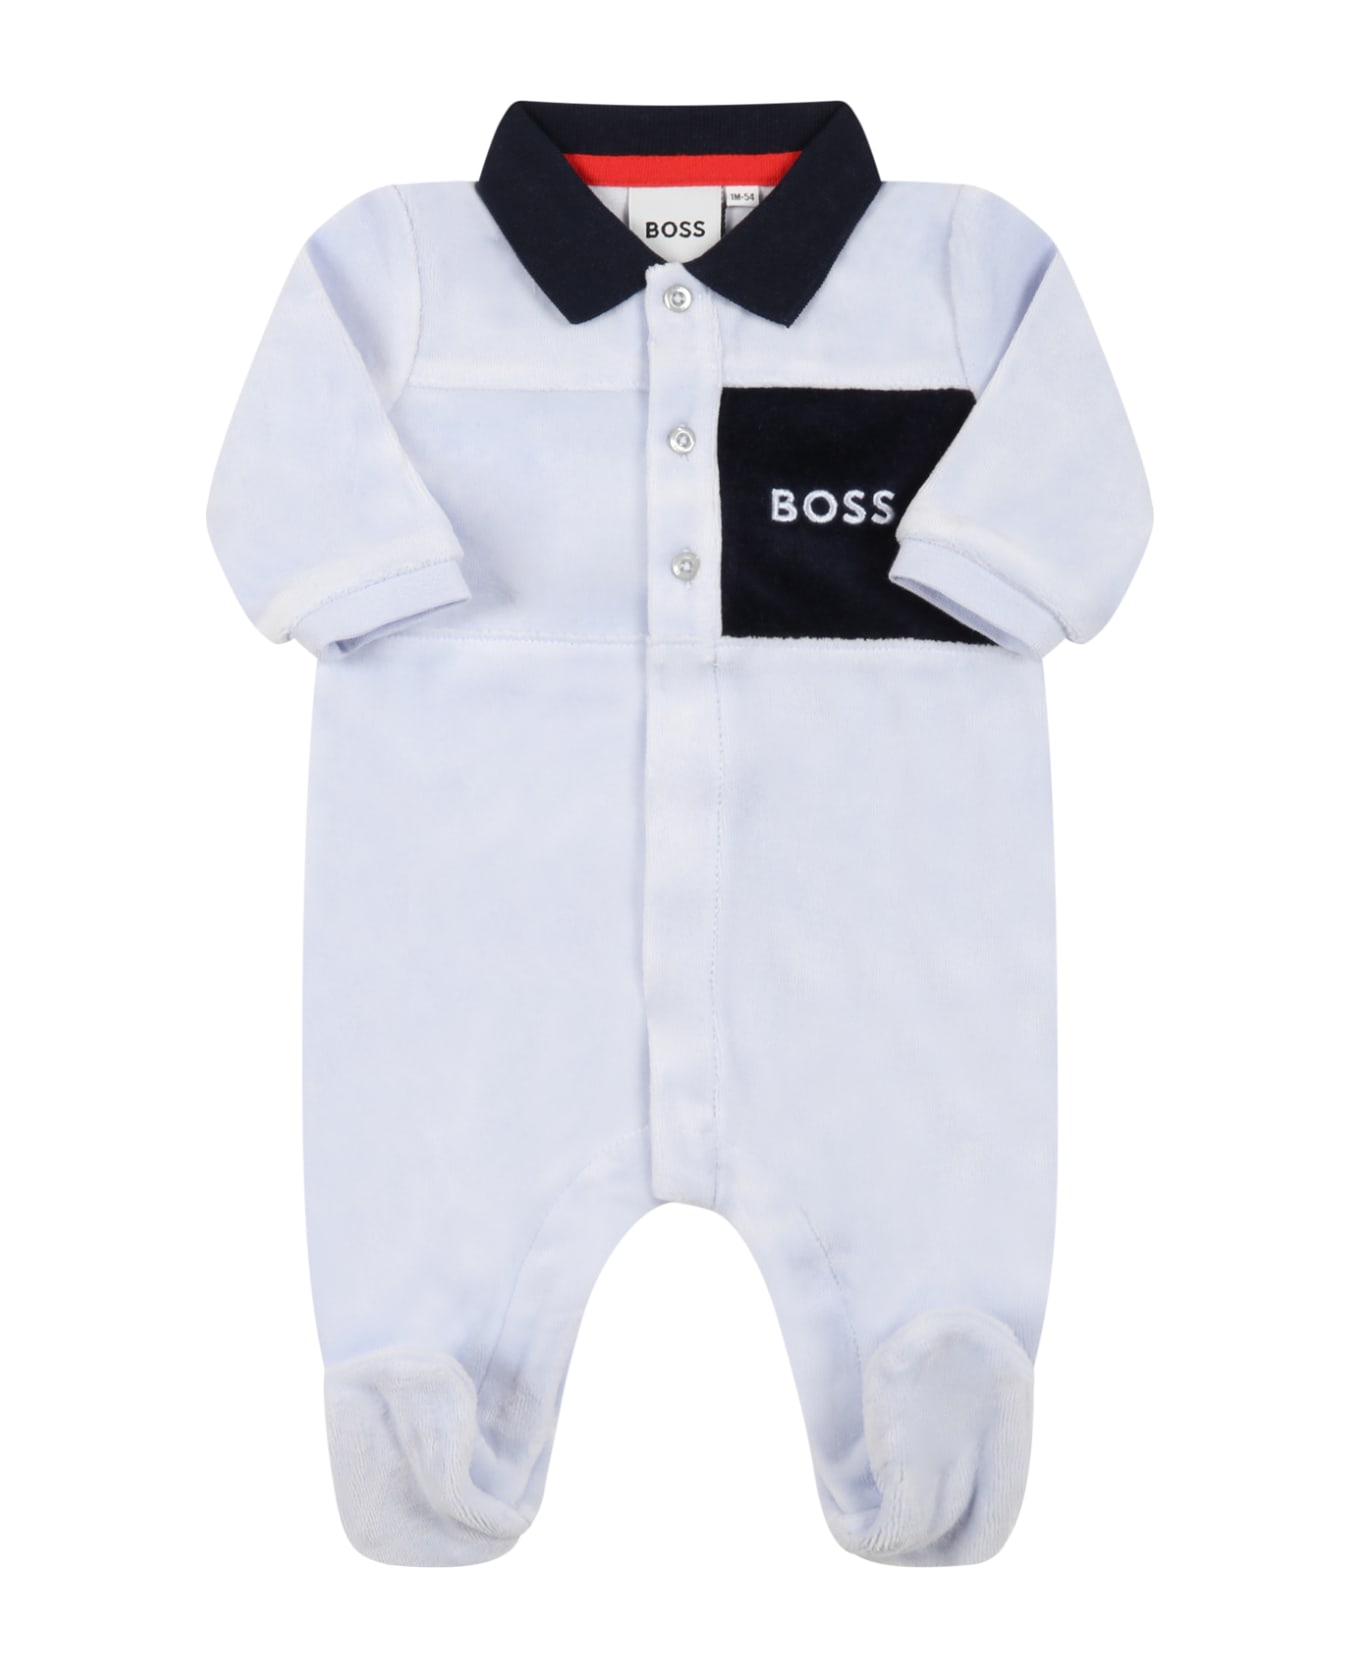 Hugo Boss Multicolor Babygrow For Baby Boy With Logo - Light Blue